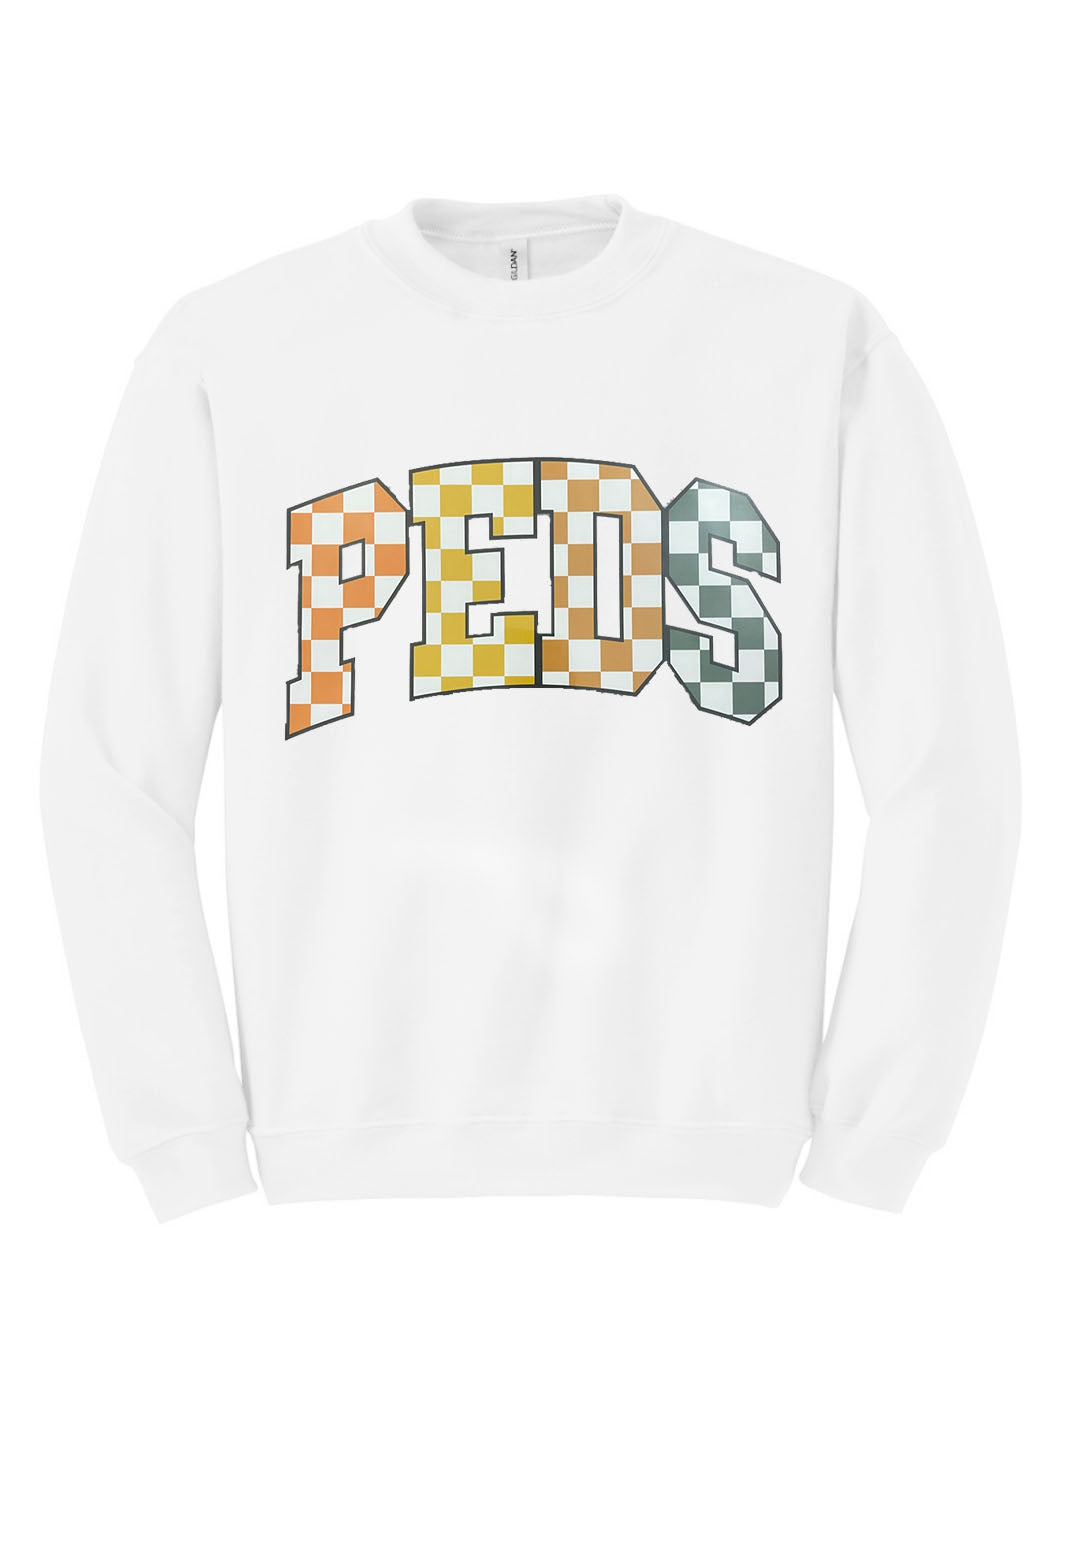 Peds Unisex Shirt or Crew